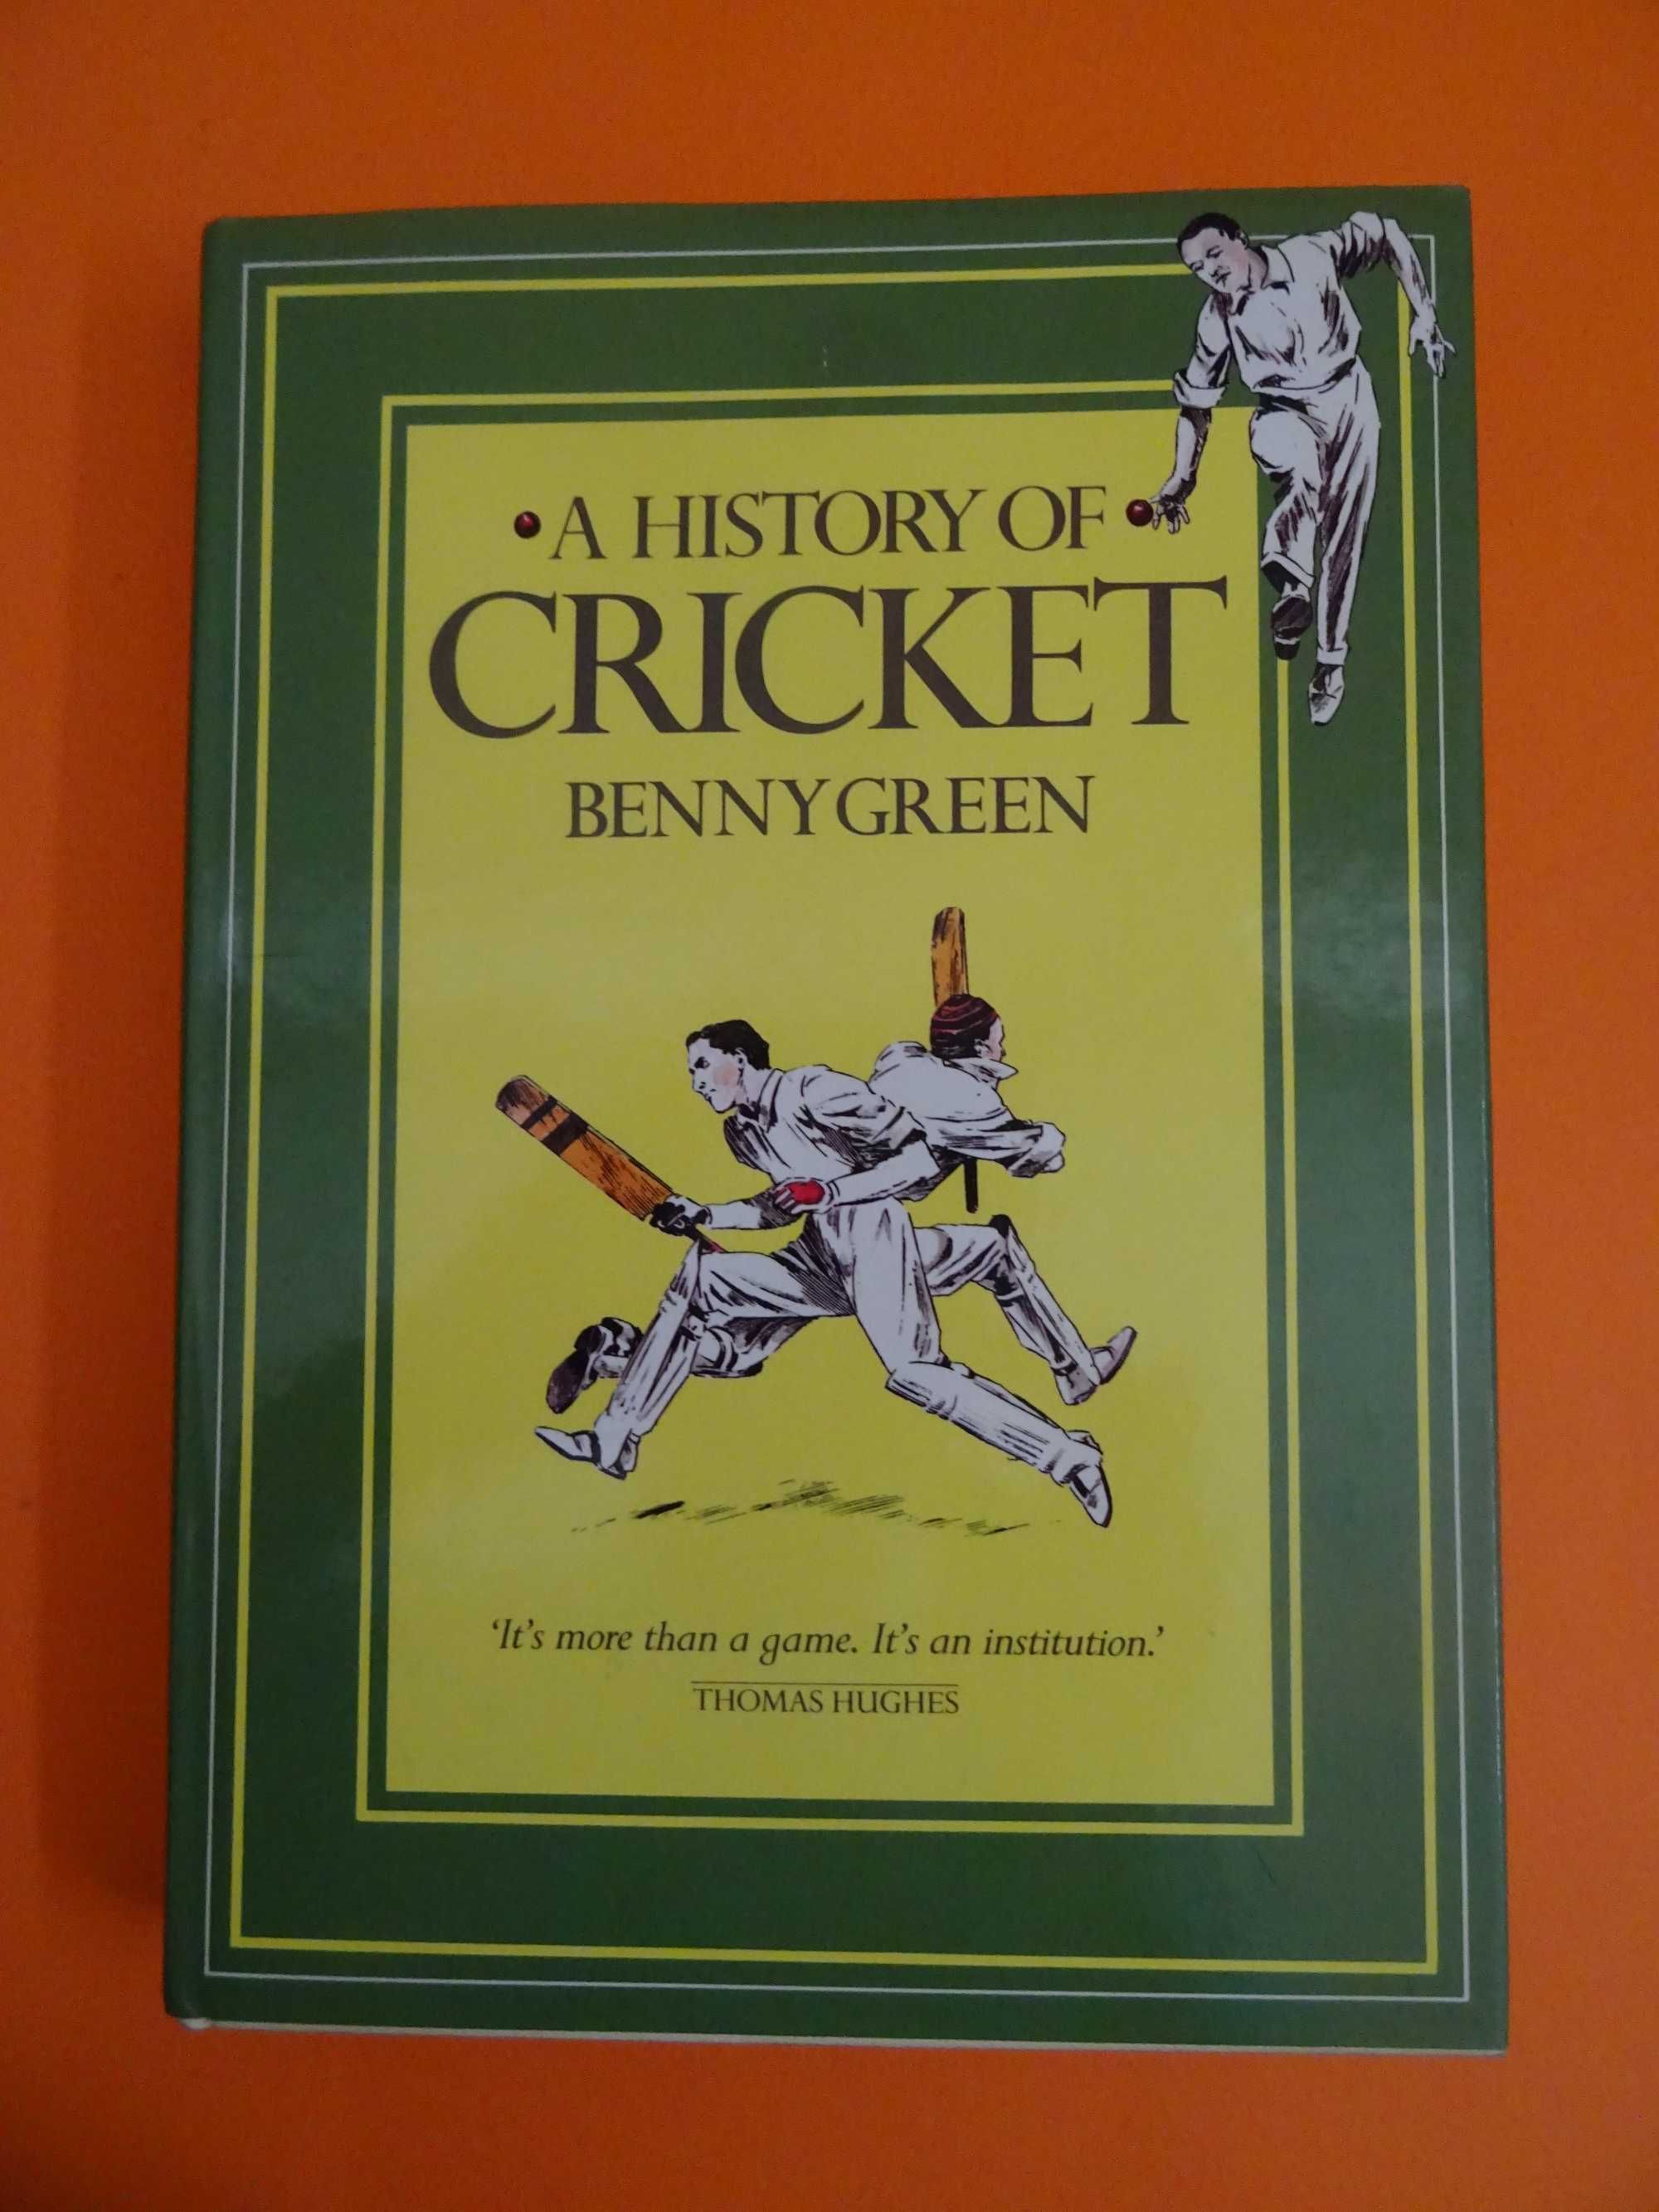 A history of Cricket - Benny Green